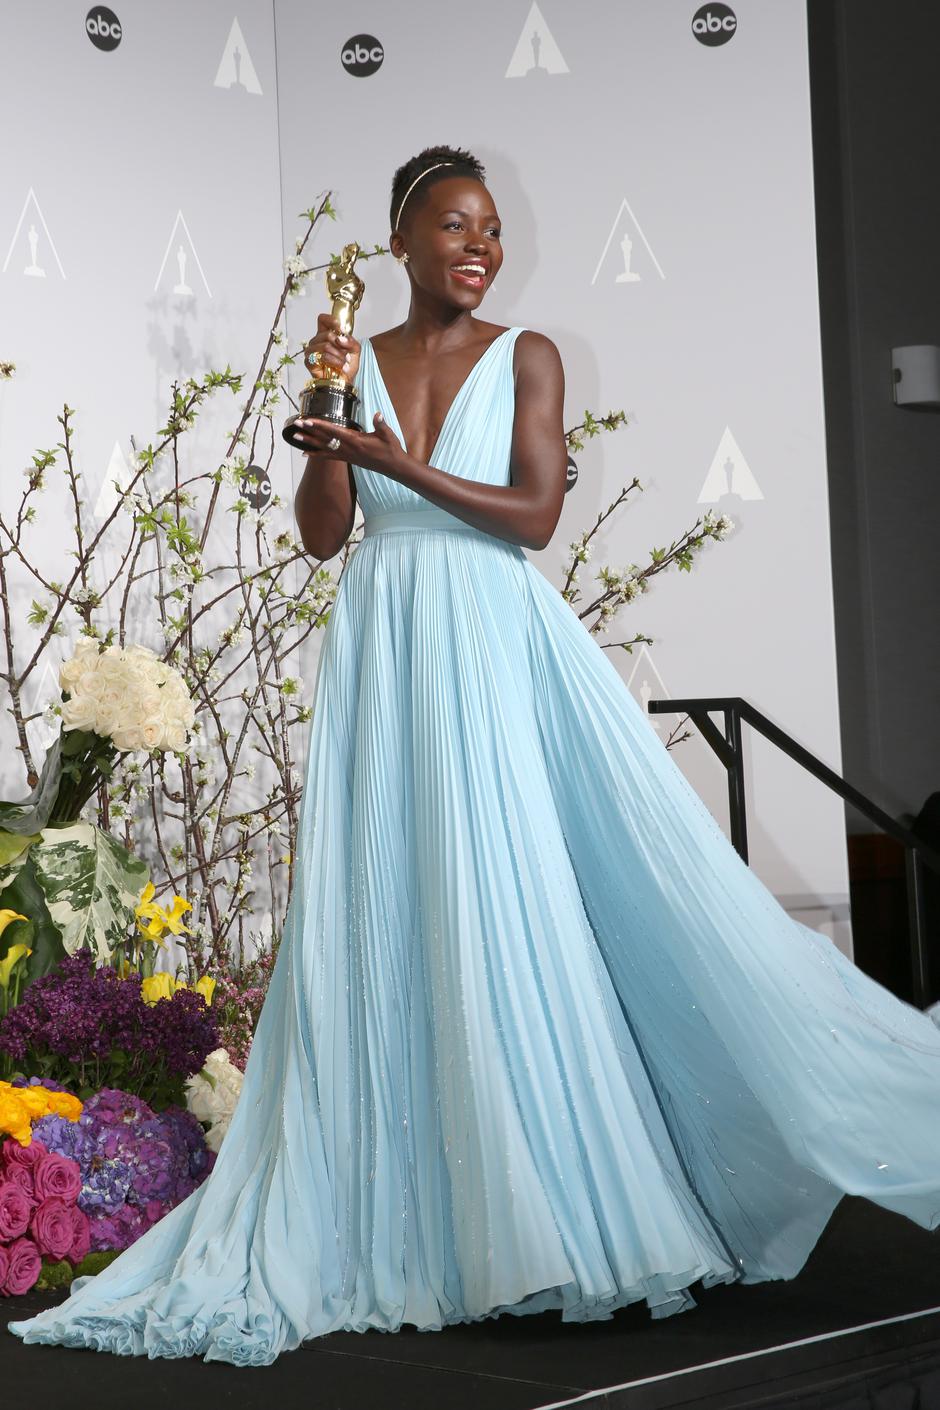 Lupita Nyong'o, dodjela Oscara | Autor: Shutterstock